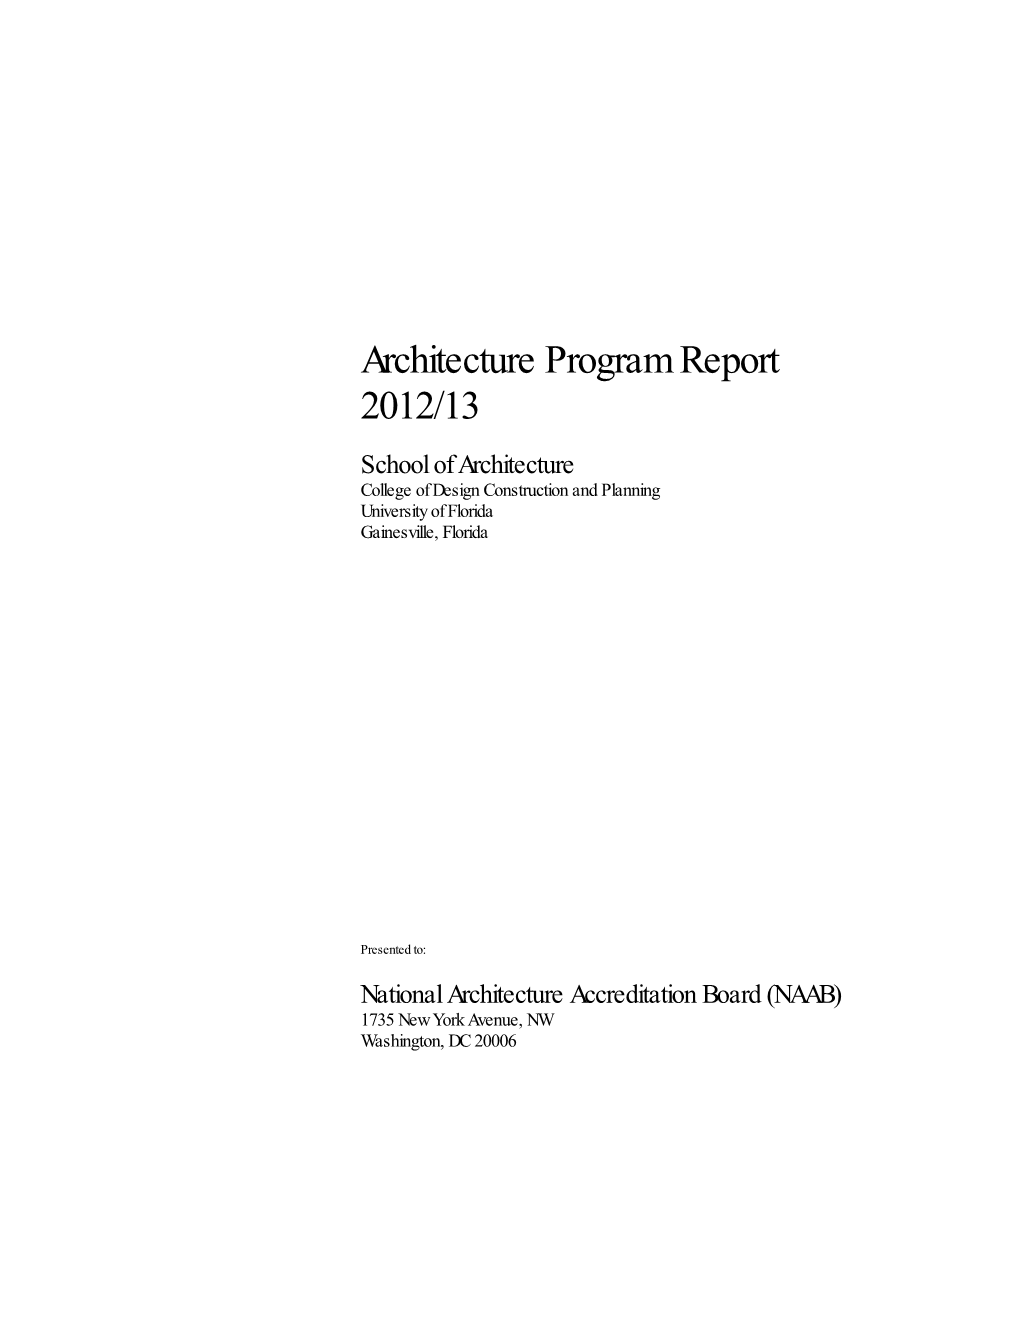 Architecture Program Report 2012/13